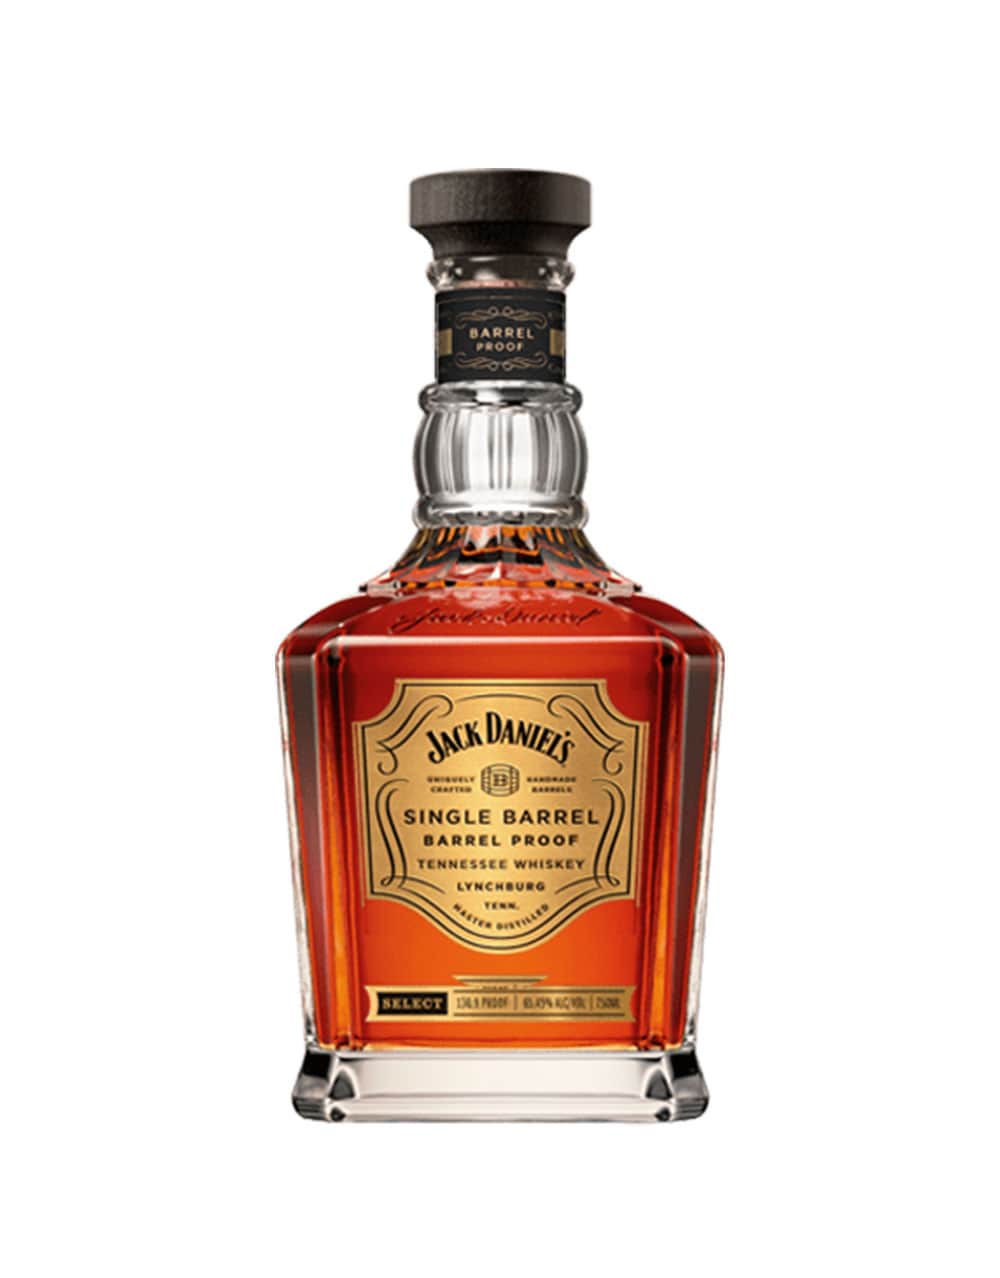 Jack Daniels Single Barrel Barrel Proof Tennessee Whiskey 375ml